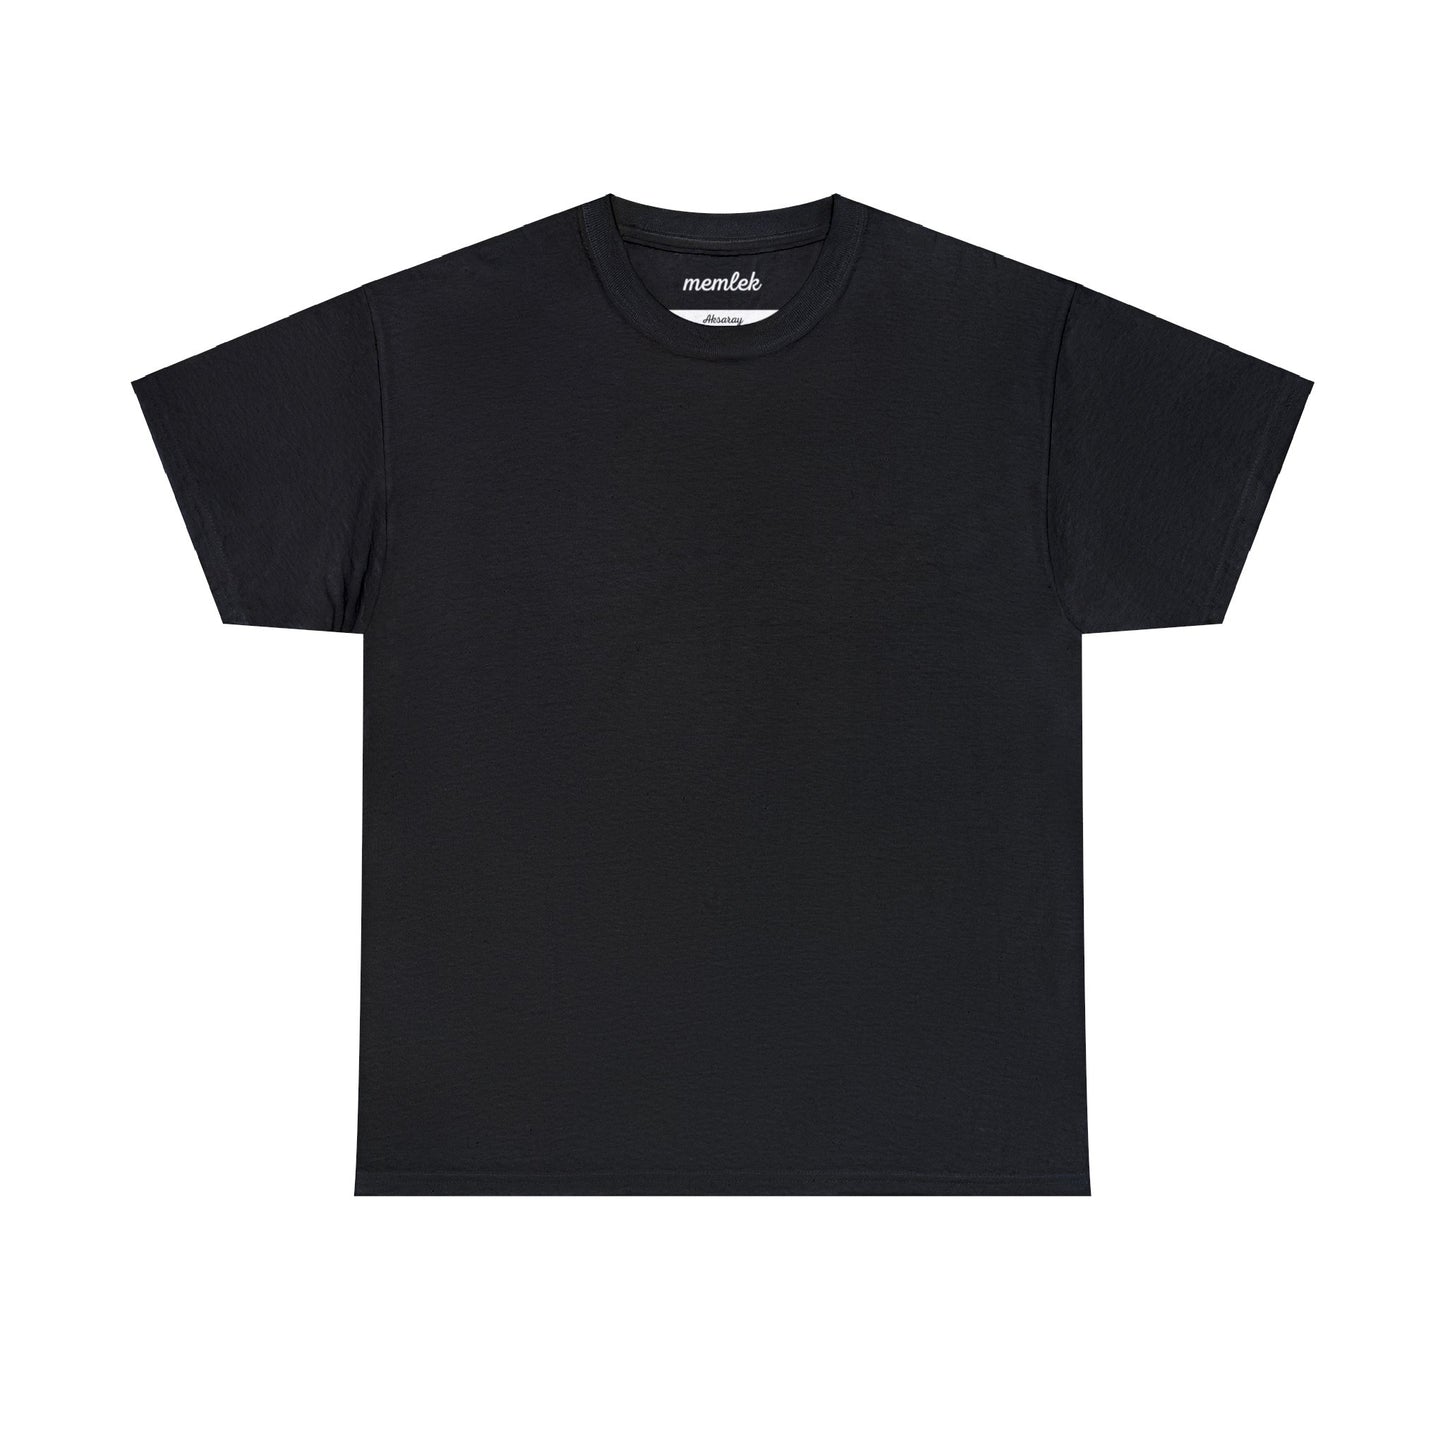 Kurt - 68 Aksaray - T-Shirt - Back Print - Black/White